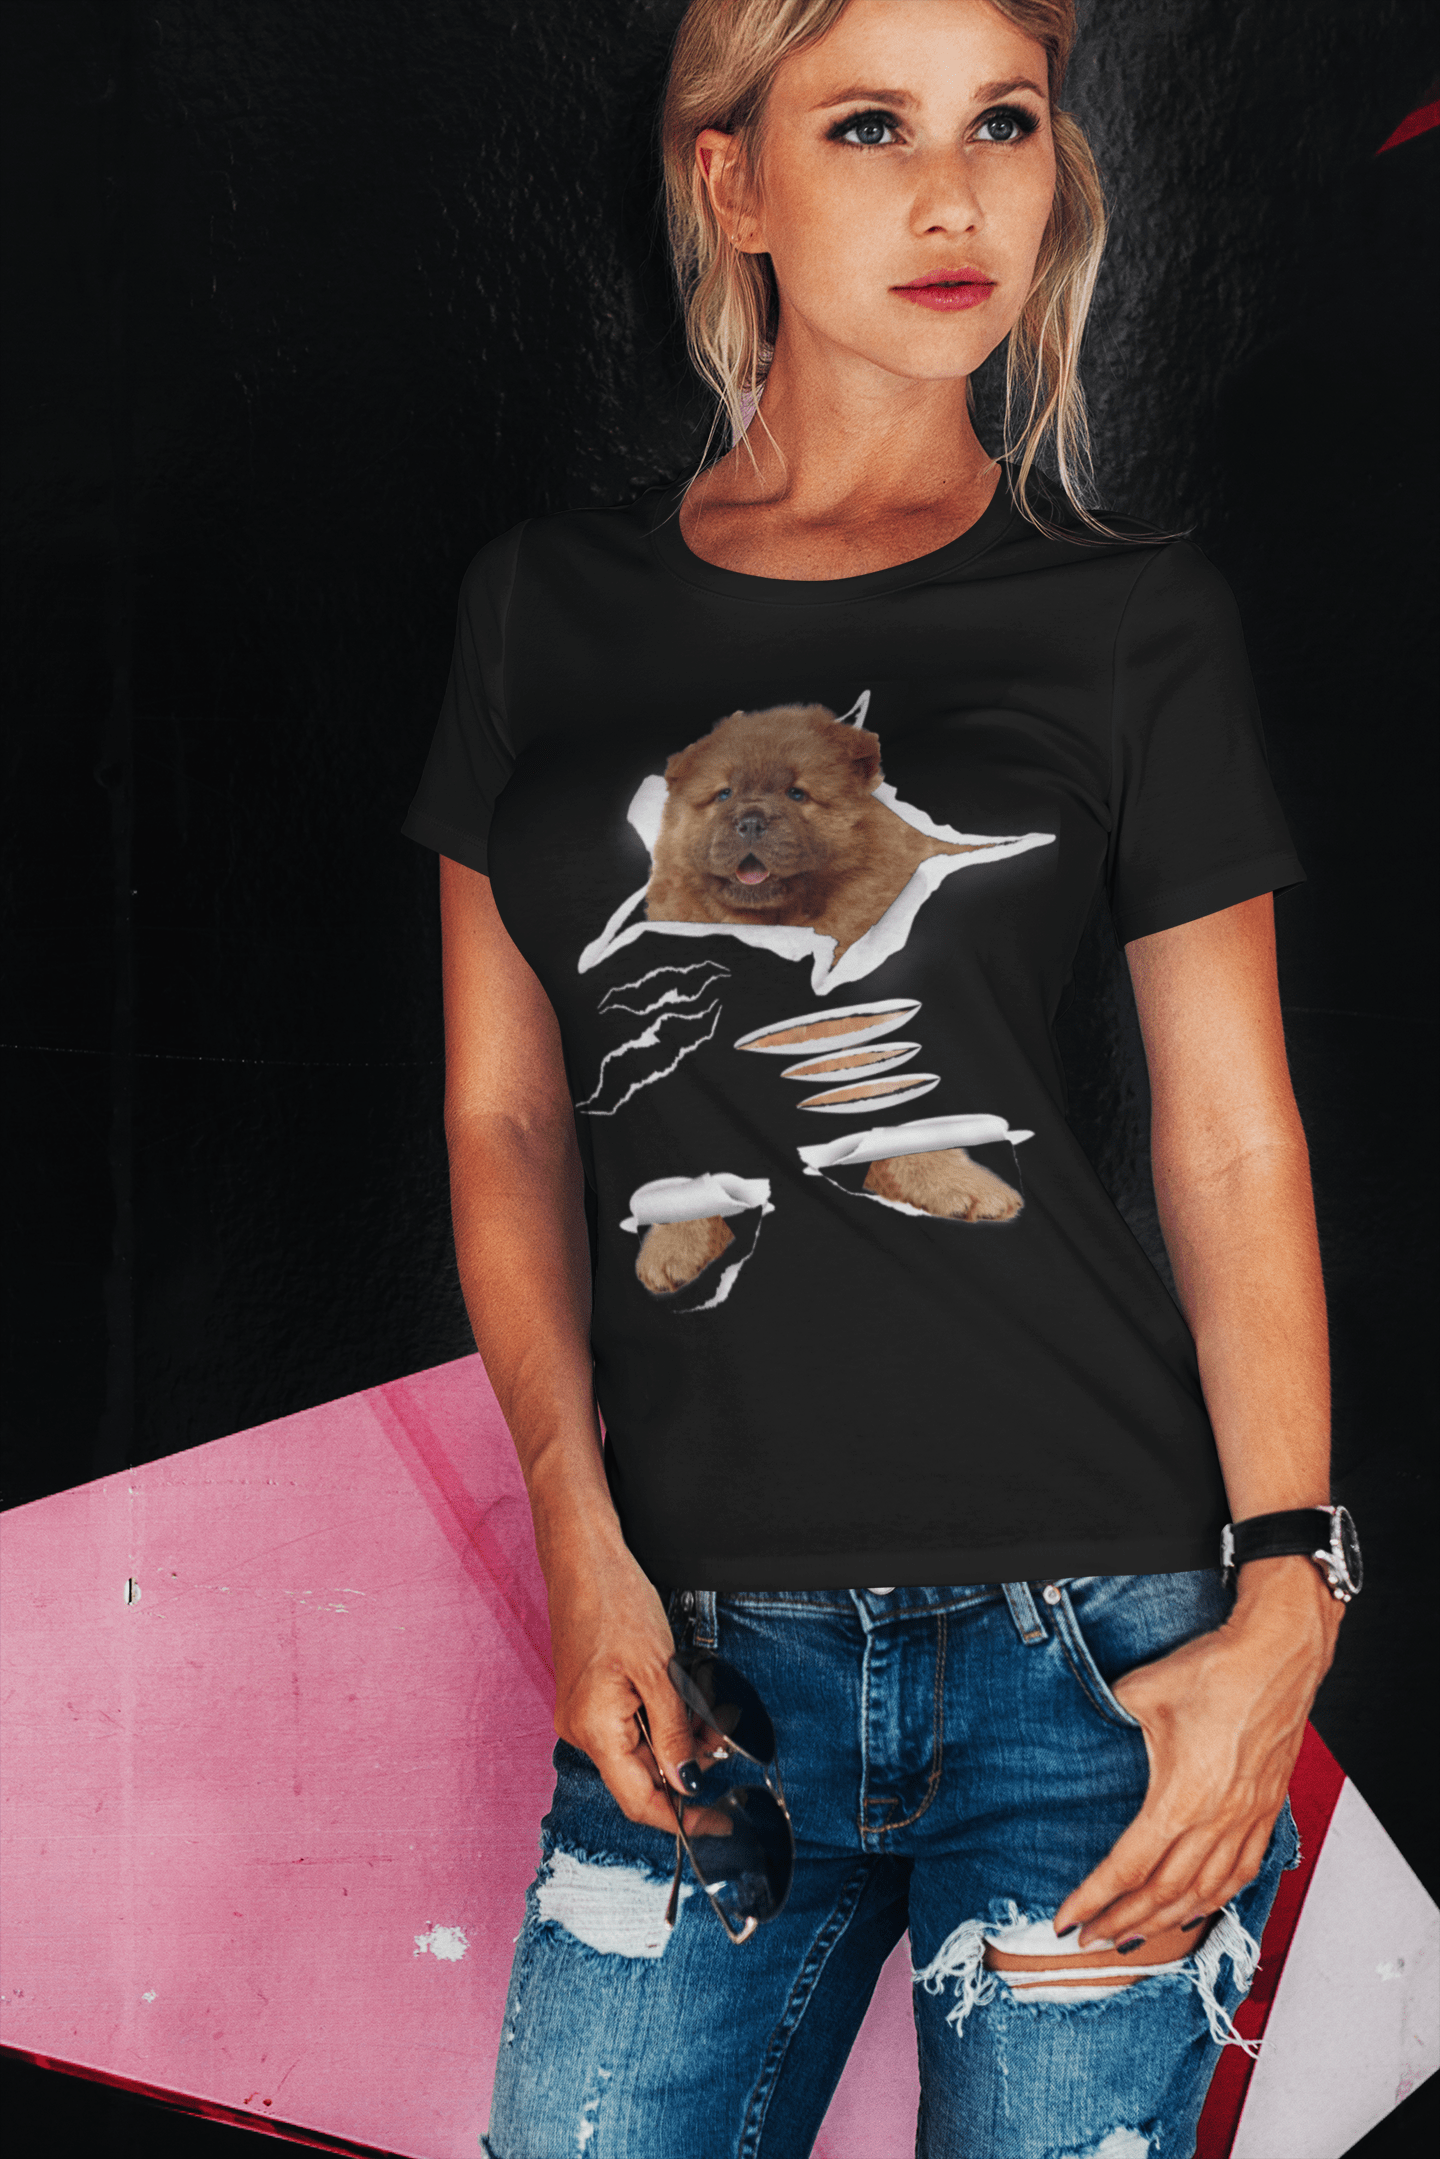 ULTRABASIC Women's Organic T-Shirt - Chow Chow - Funny Dog Shirt - Dog Clothes